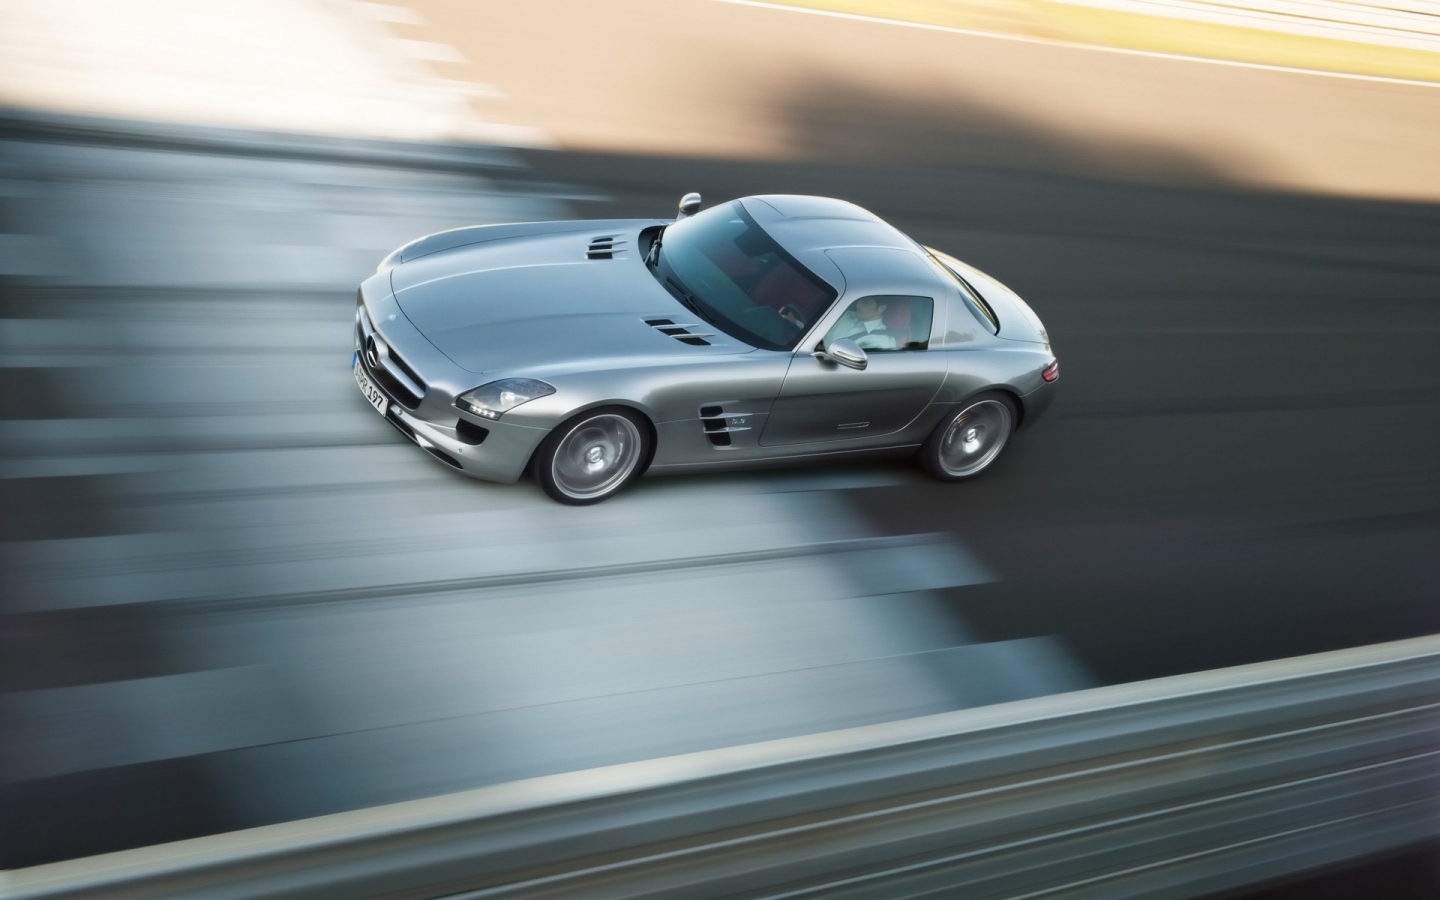 Mercedes-Benz SLS AMG Silver 2010 for 1440 x 900 widescreen resolution